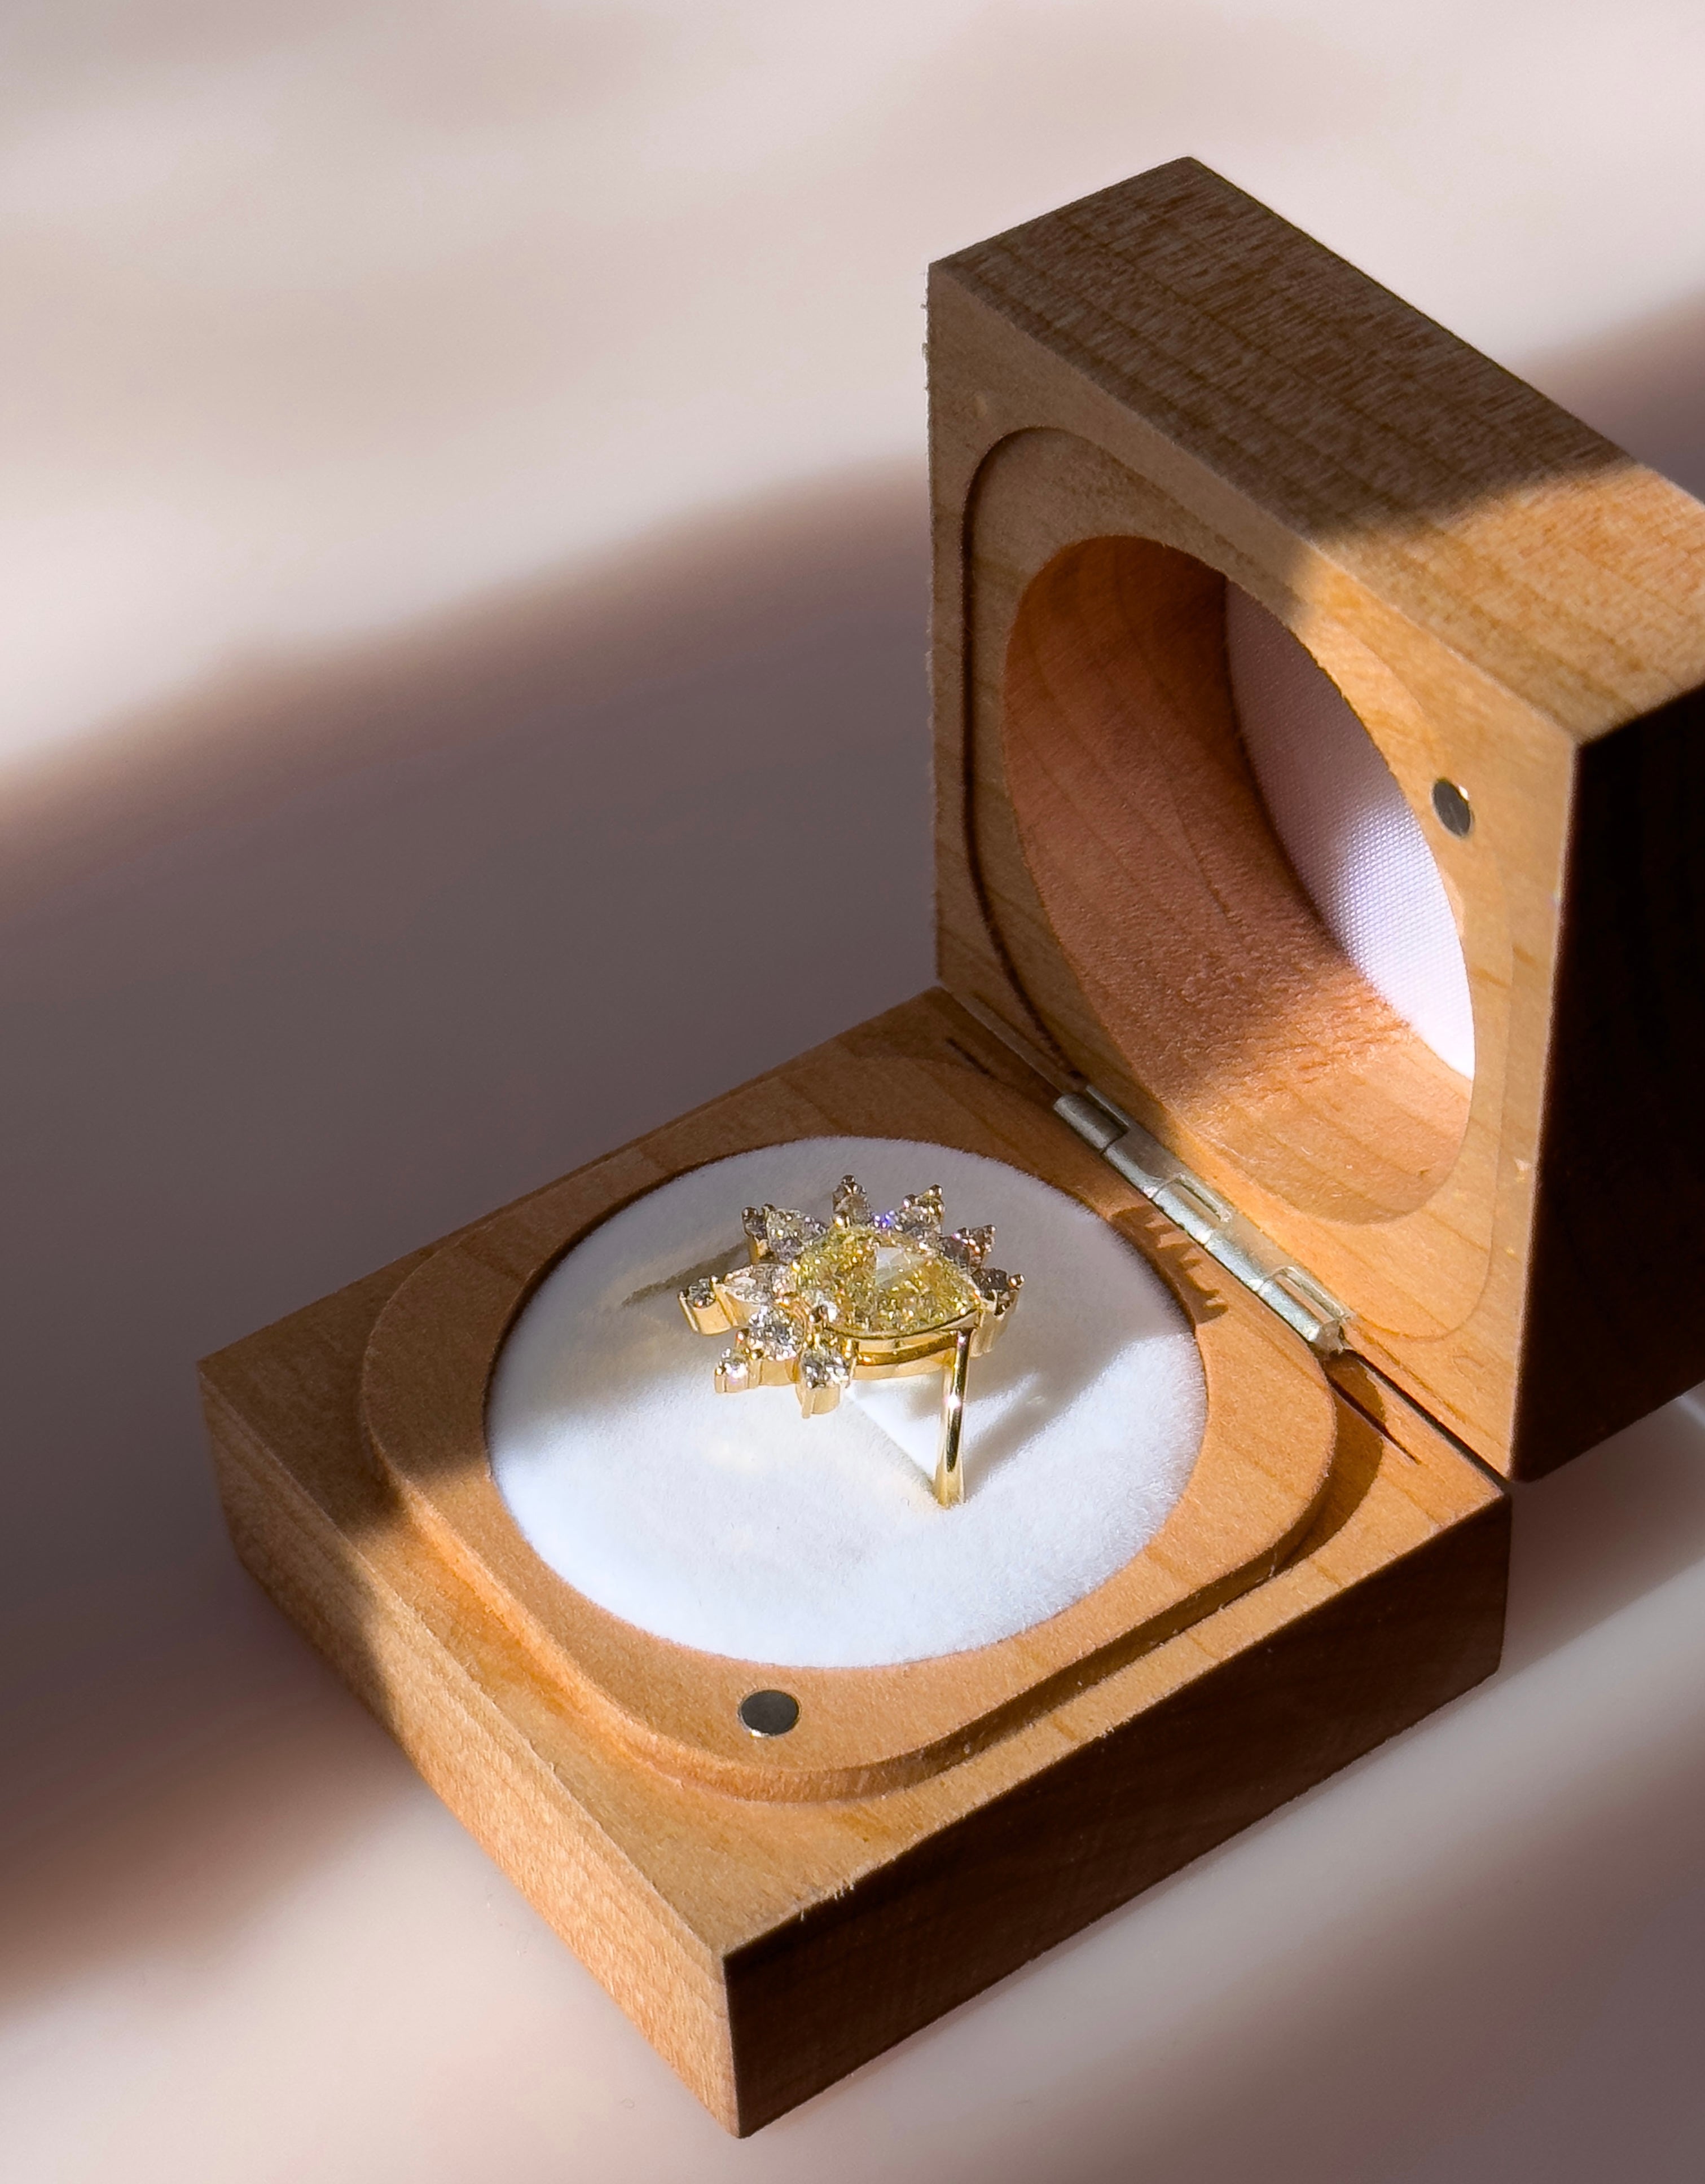 LKC's diamond ring placed inside a proposal box